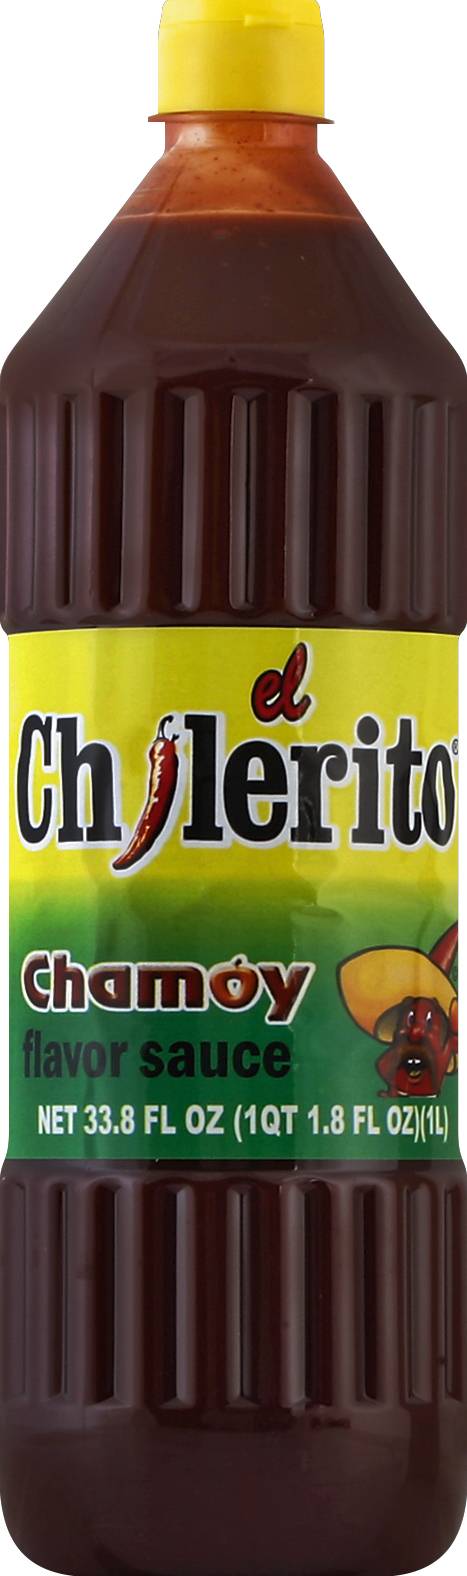 El Chilerito Chamoy Flavor Sauce